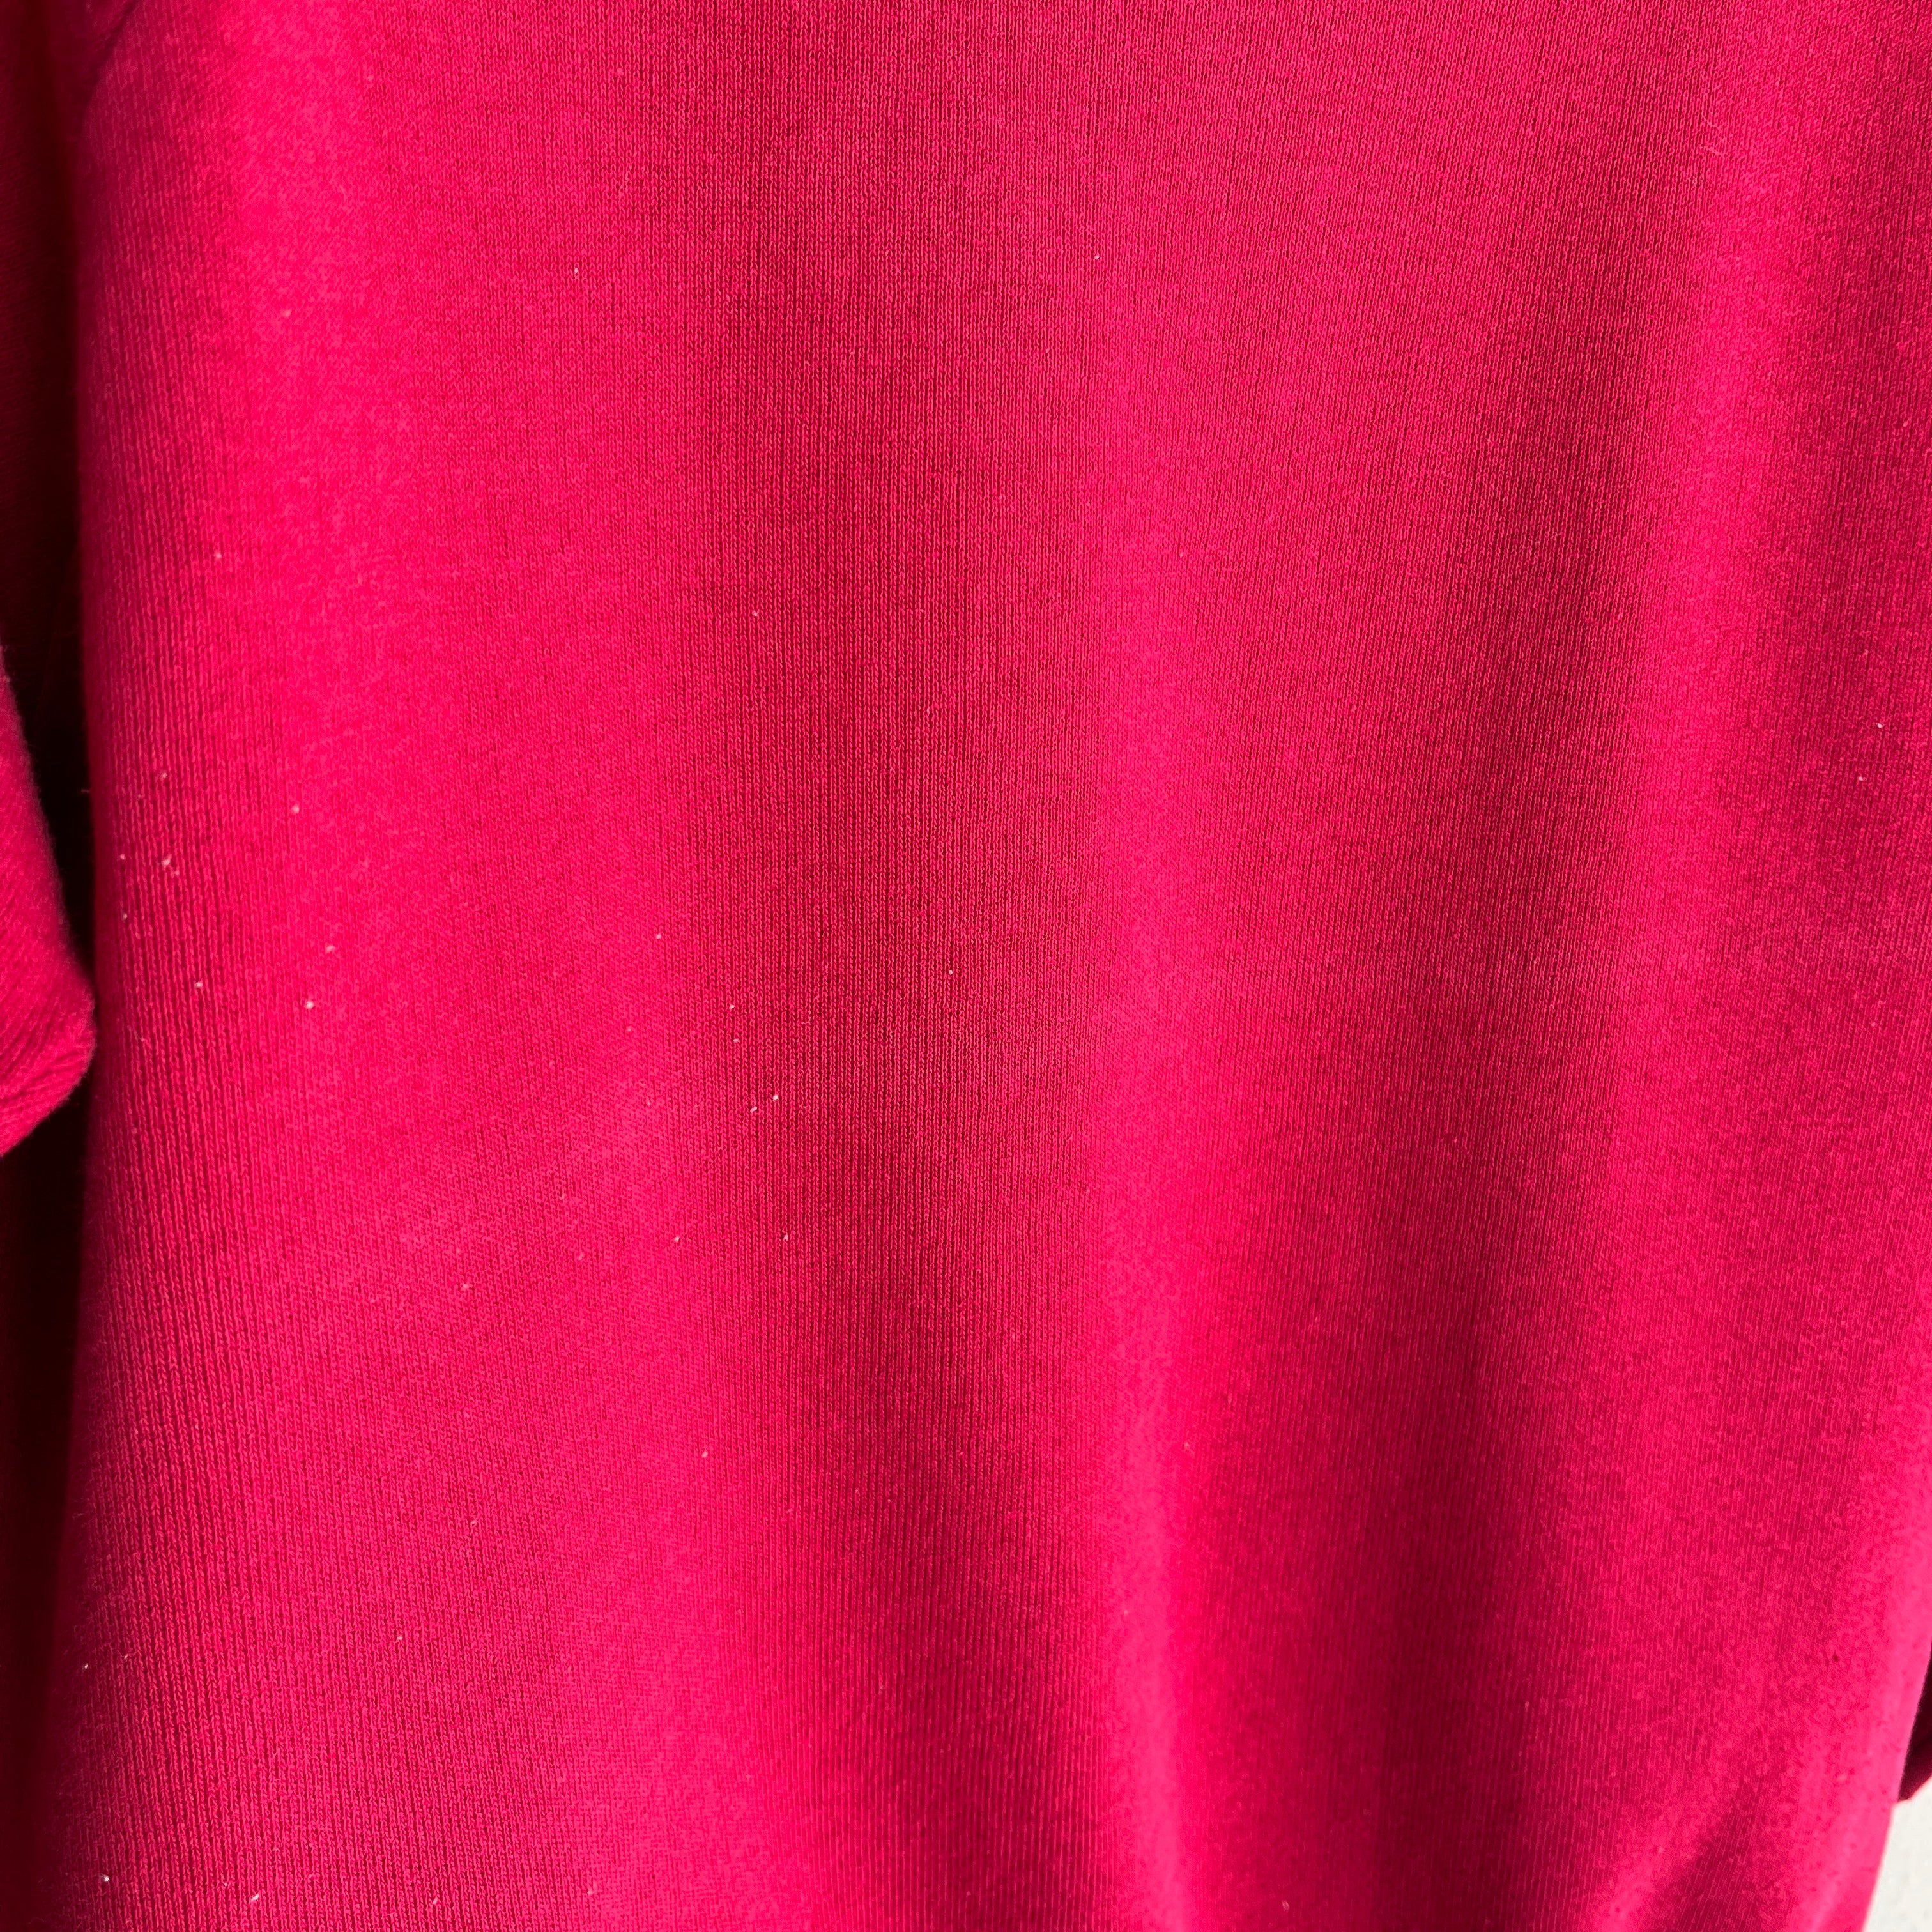 1980s Magenta Pink/Burgundy Wine Raglan Sweatshirt